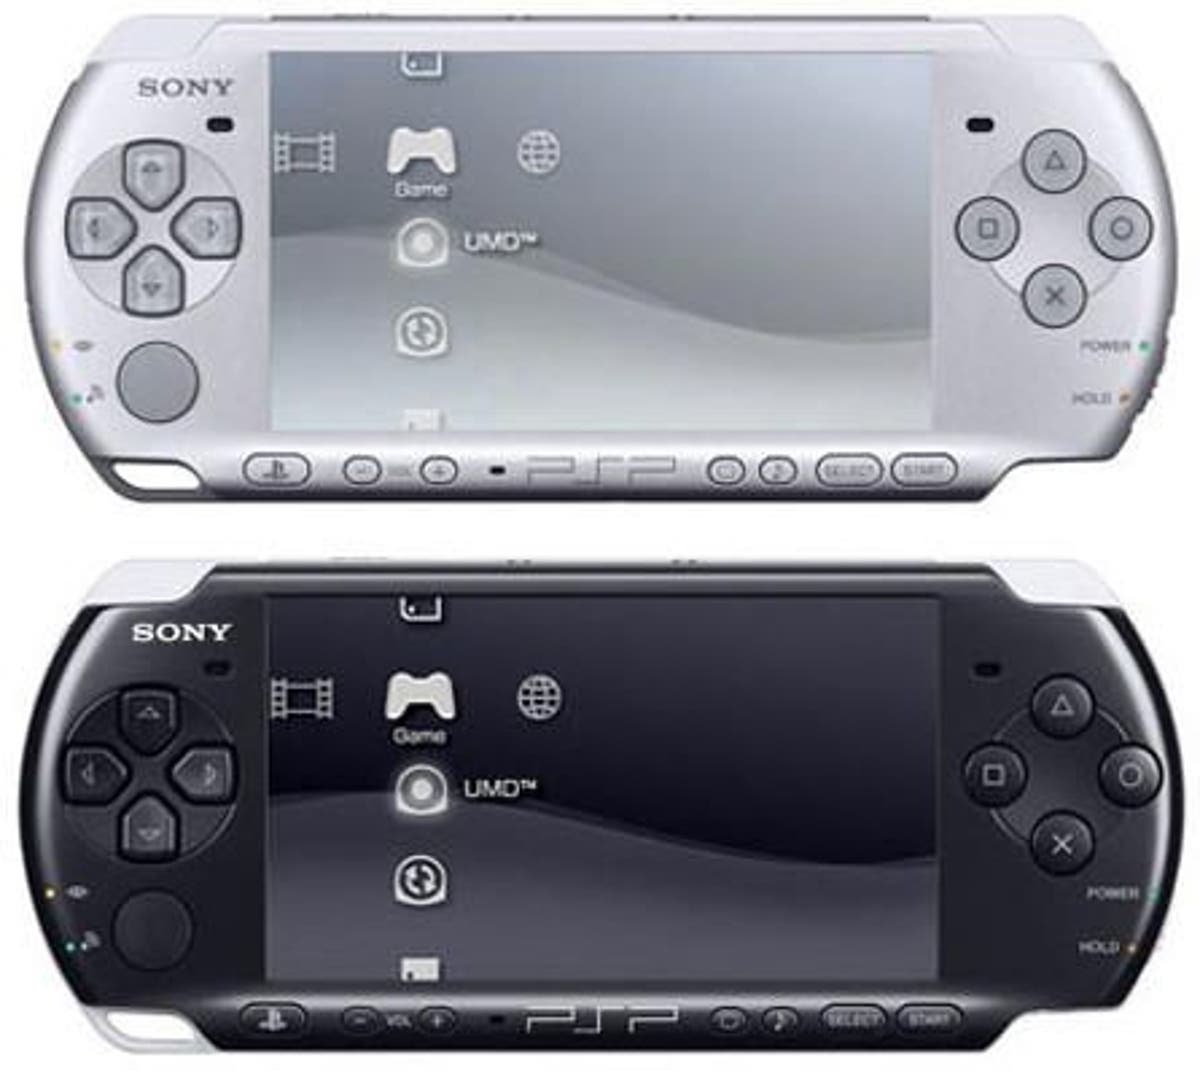 Eksklusiv Fascinate krænkelse Sony PSP-3000 baja hoy de precio a 130 euros